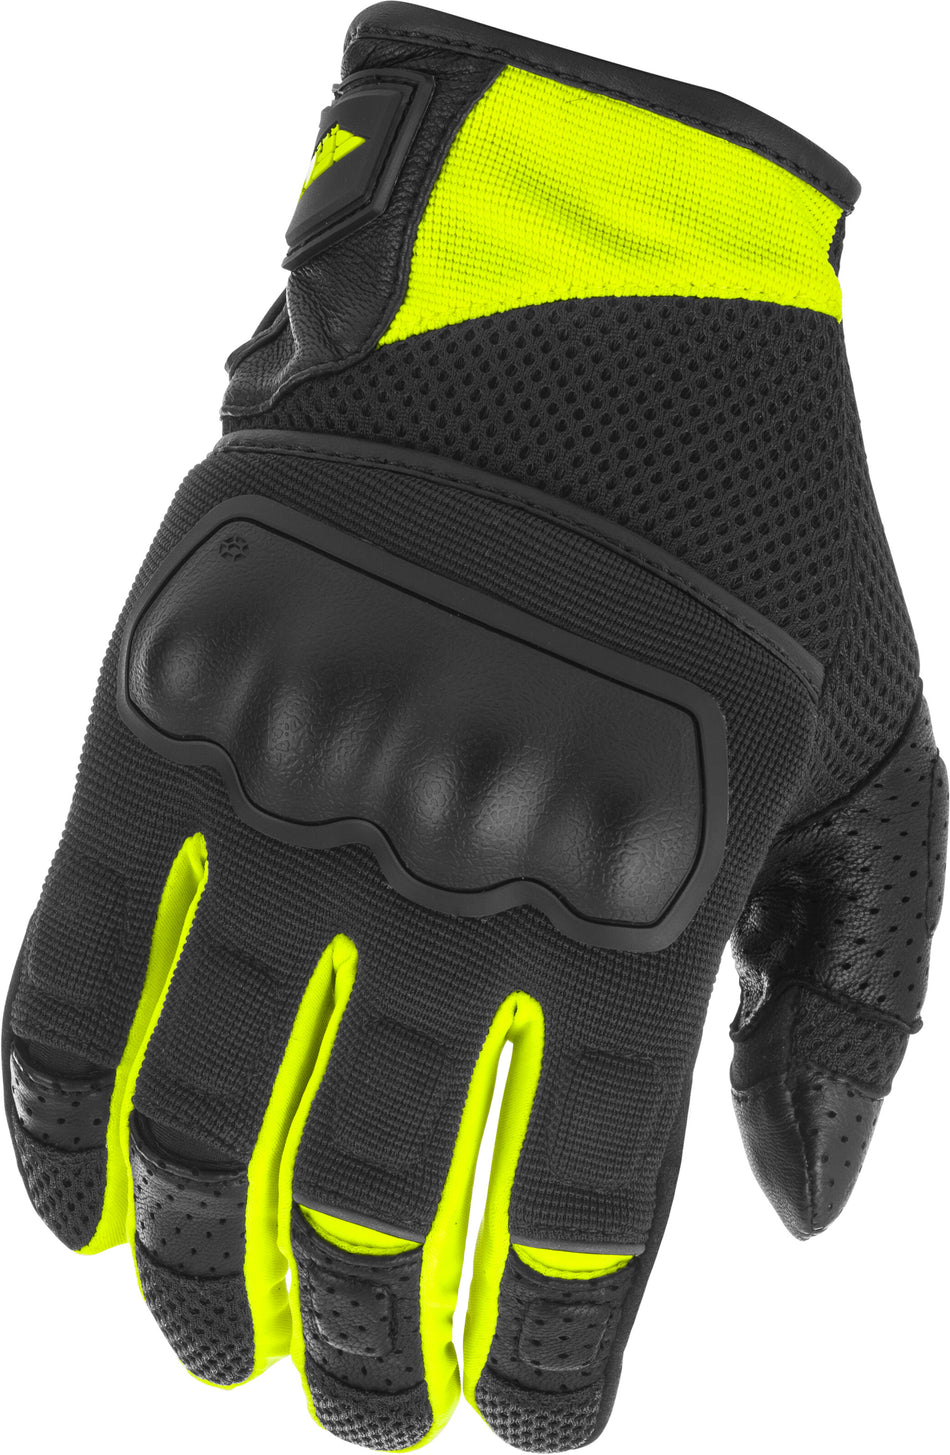 FLY RACING Coolpro Force Gloves Black/Hi-Vis Sm 476-4123S